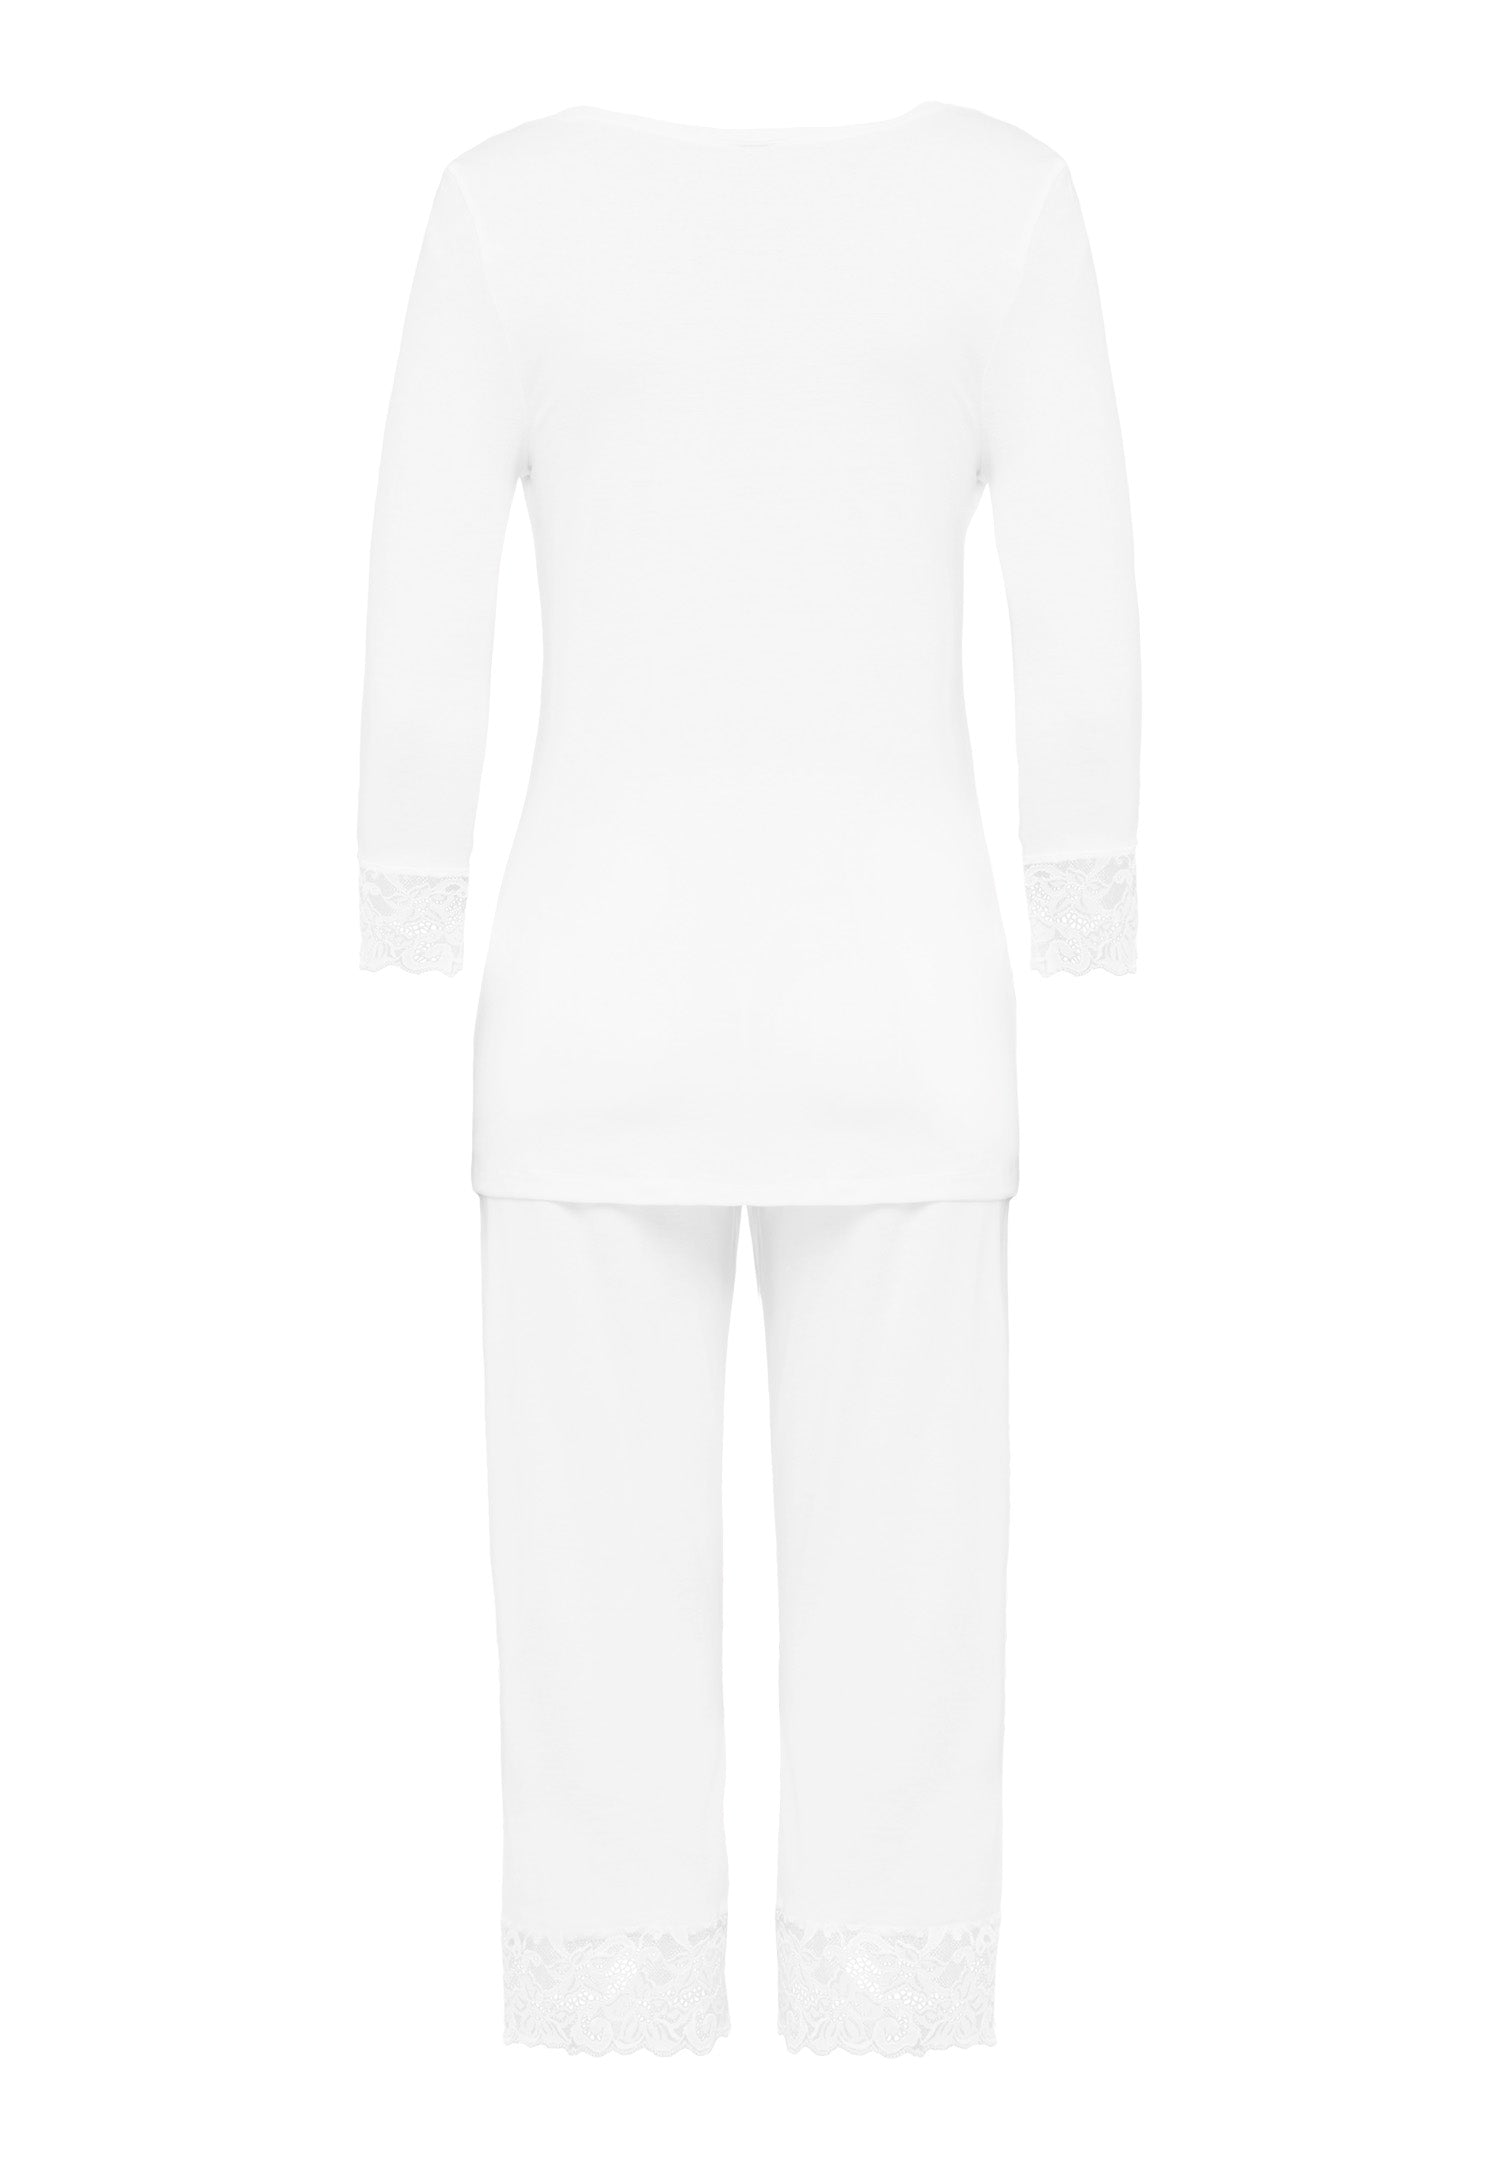 77928 Moments Crop Pajama - 101 White